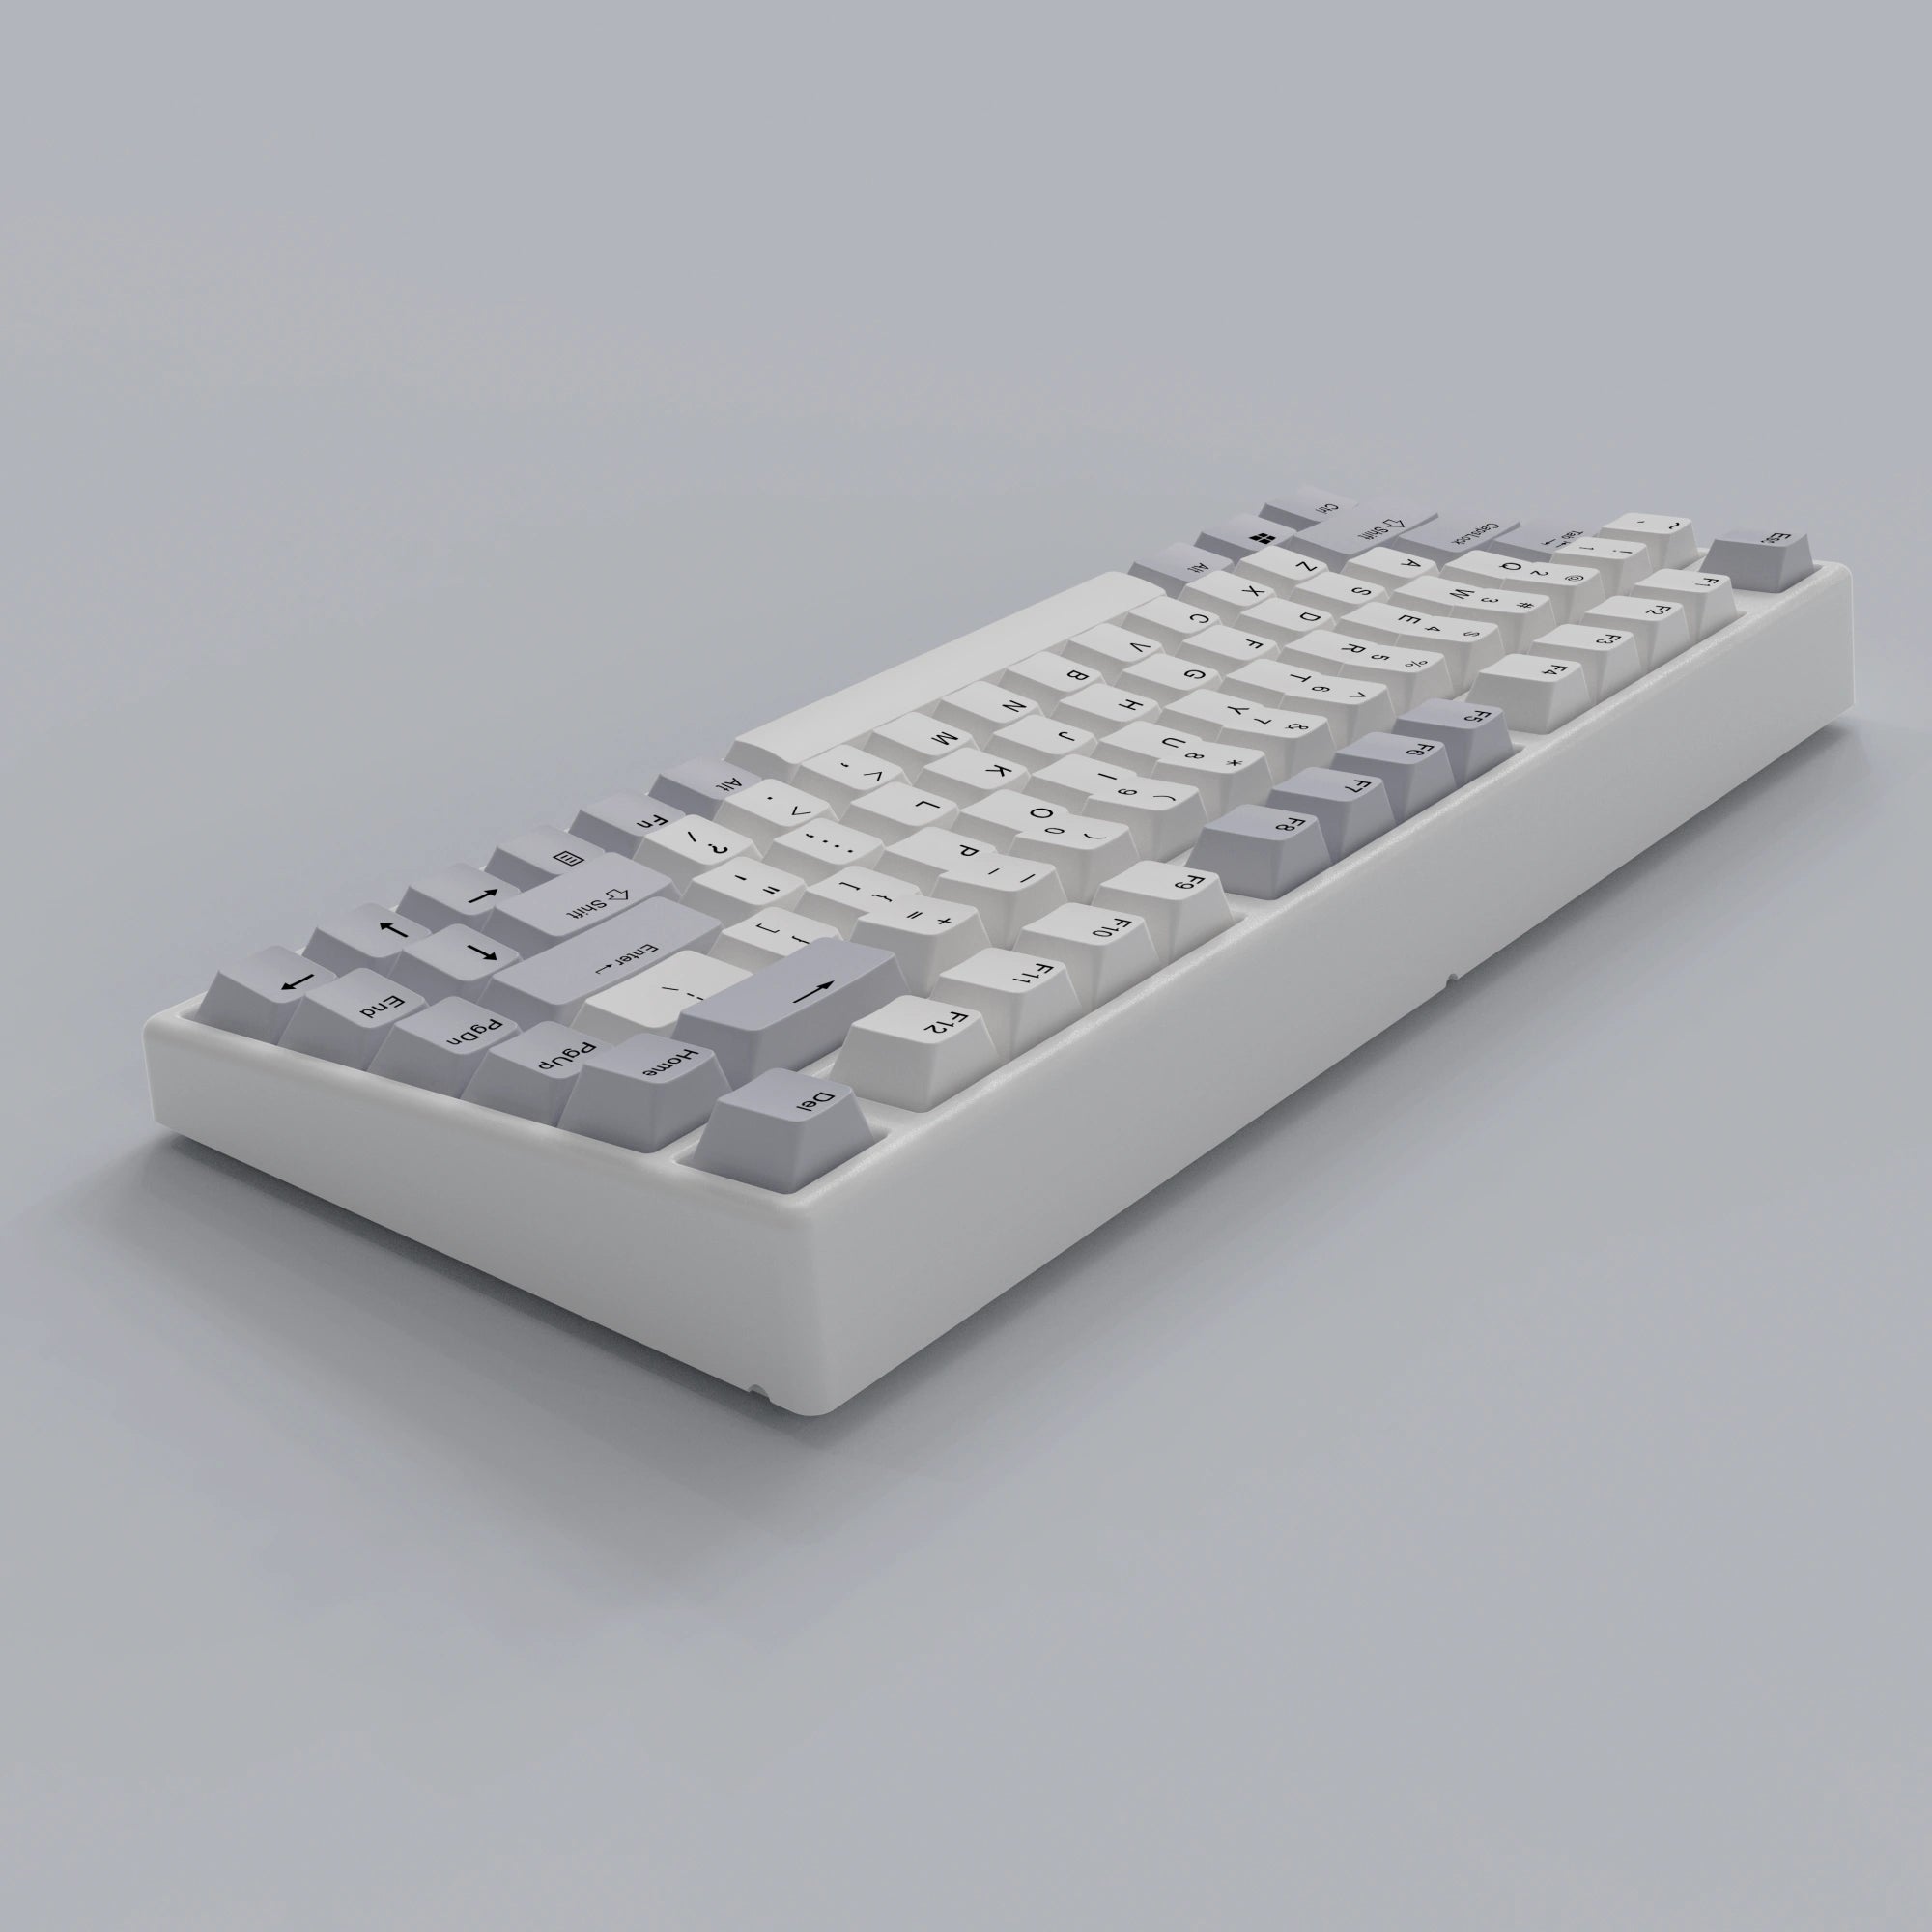 NIZ Keyboard MICRO 82 Capacitive Keyboard